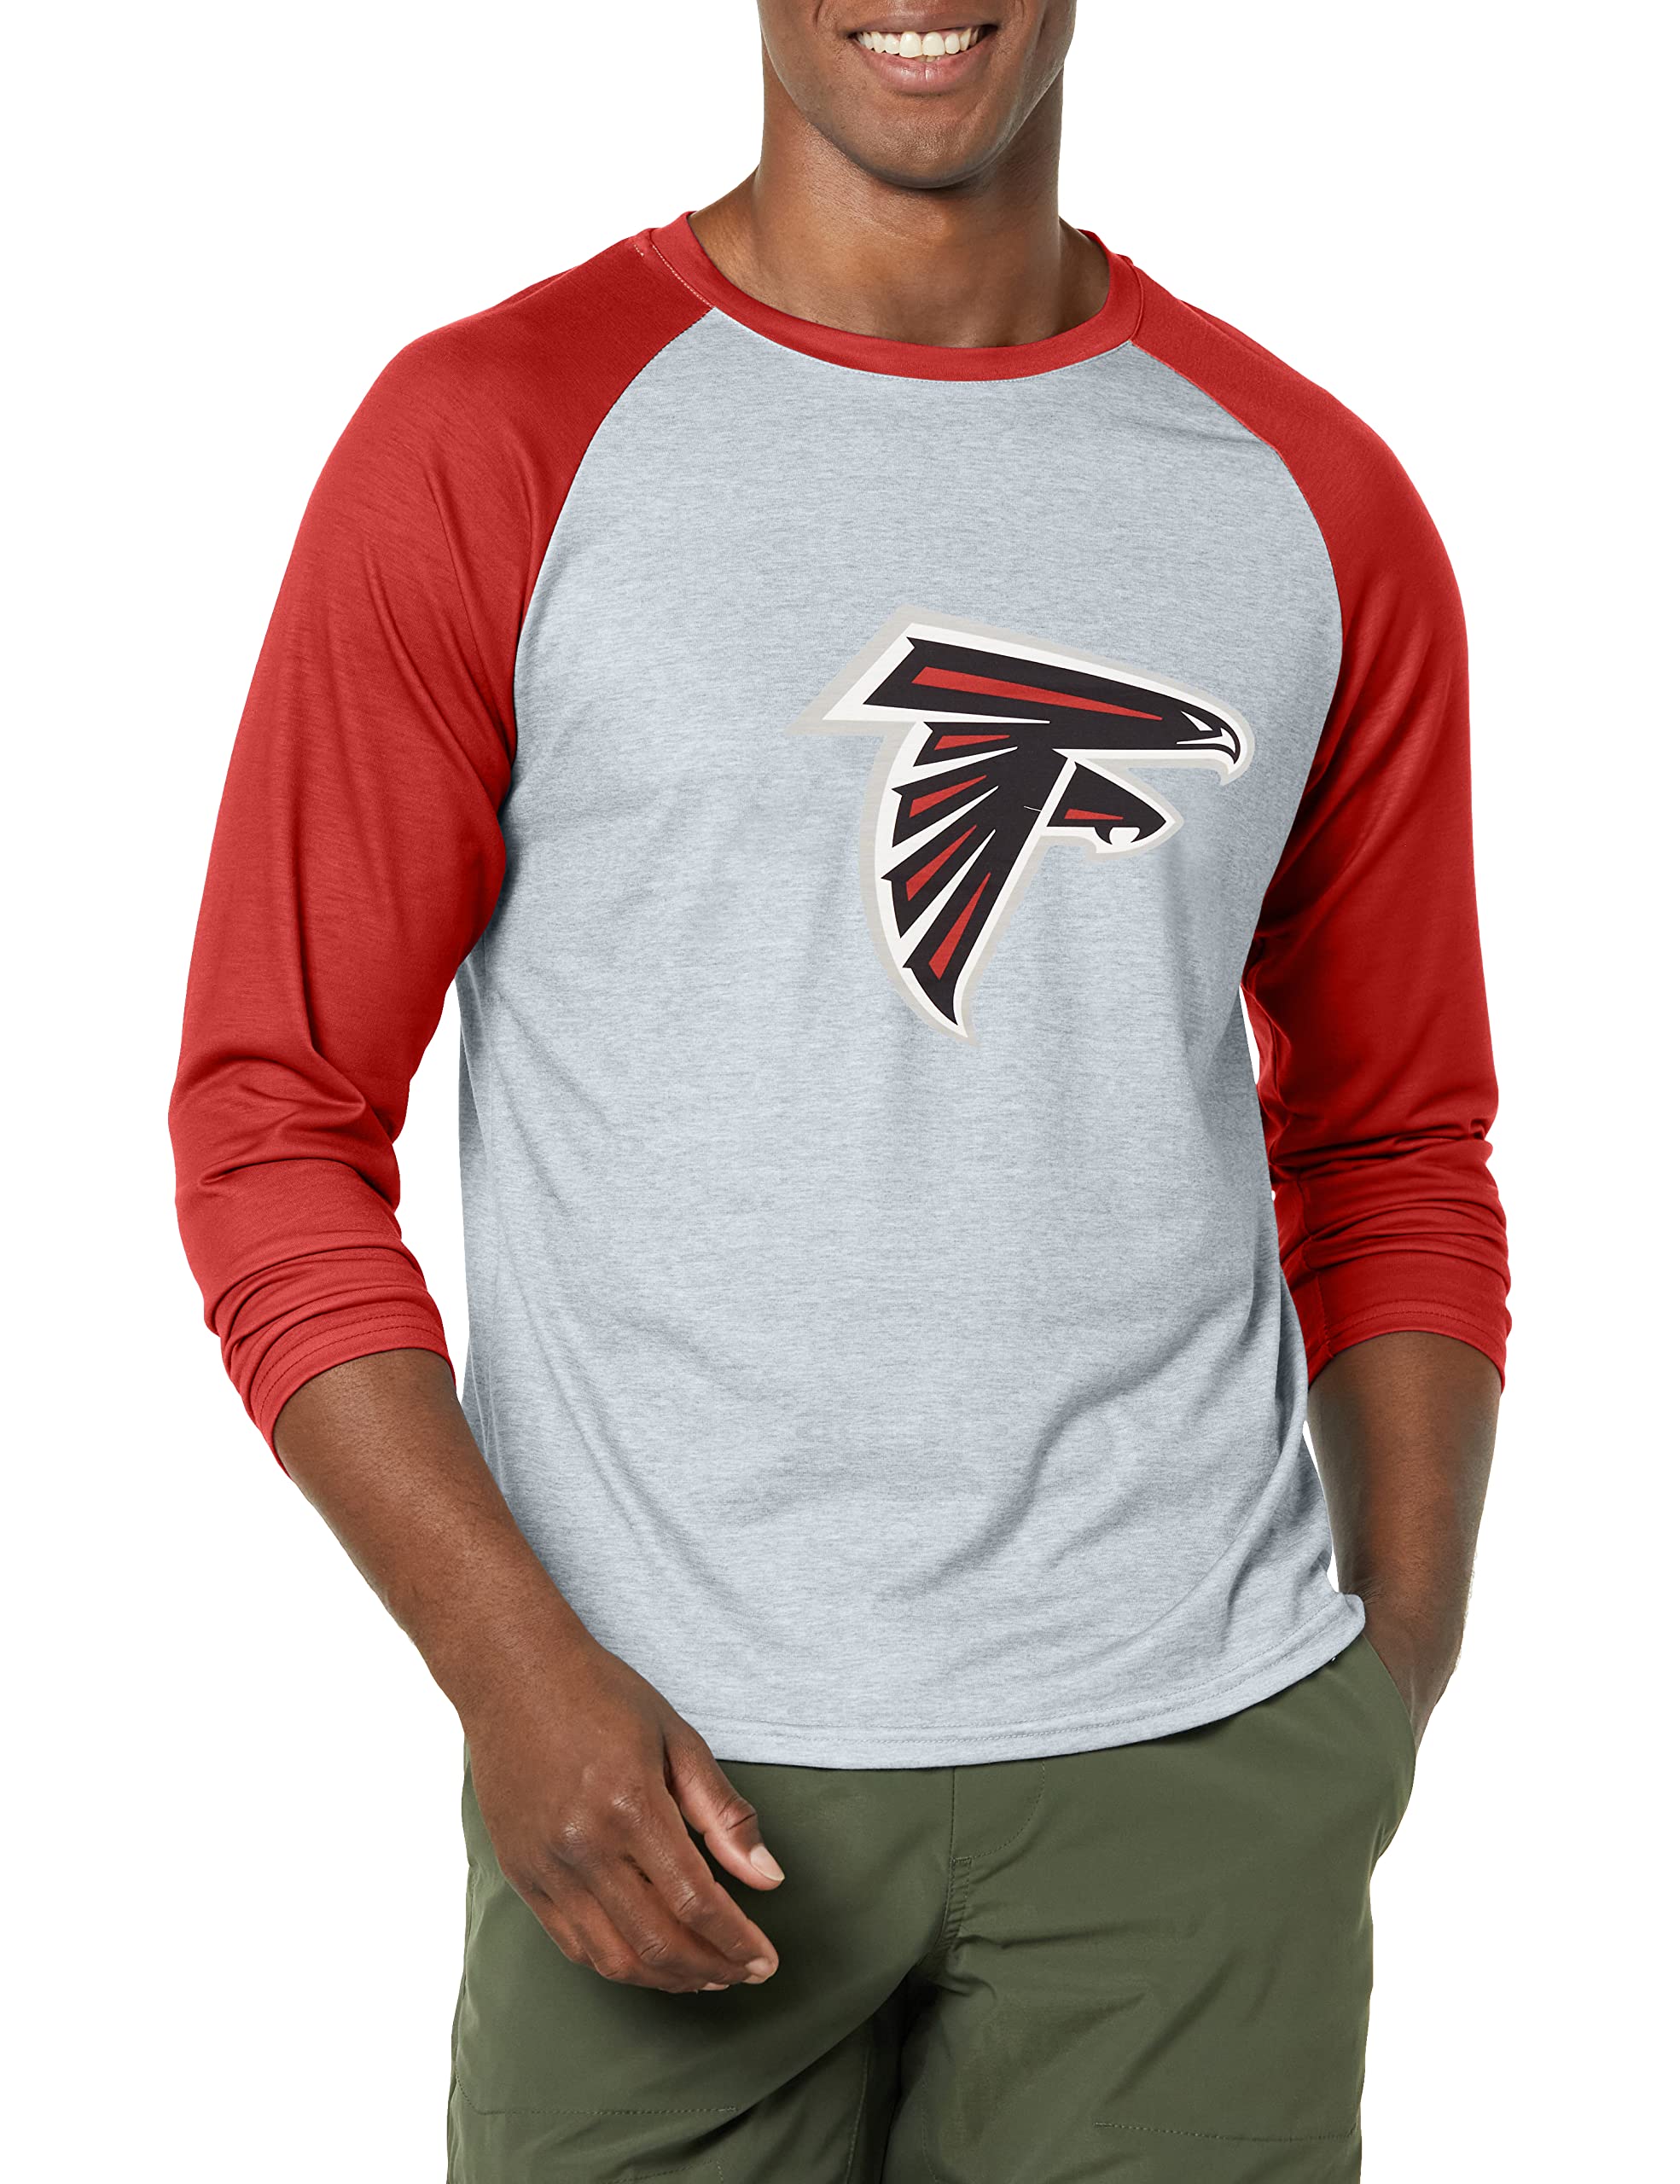 FOCO Men's NFL Team Raglan T-Shirt, Gray Big Logo, Small